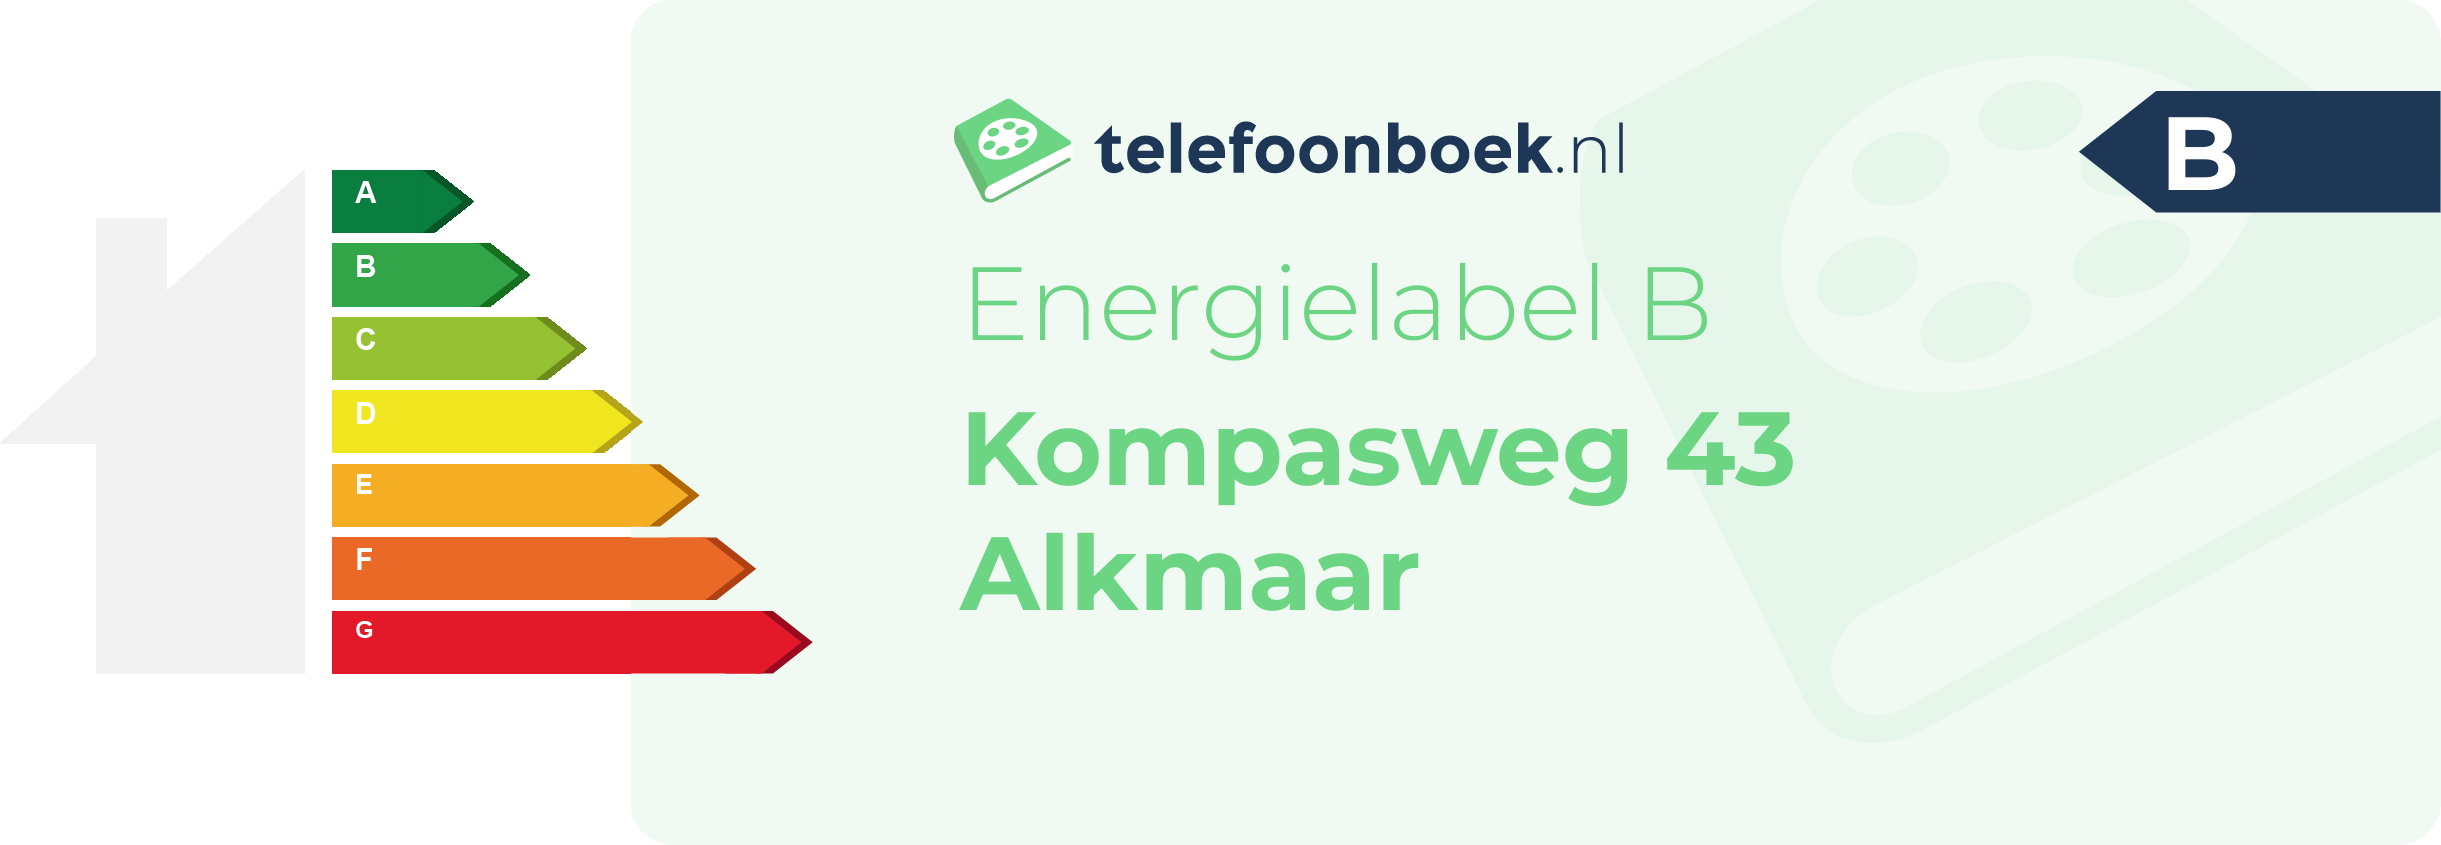 Energielabel Kompasweg 43 Alkmaar